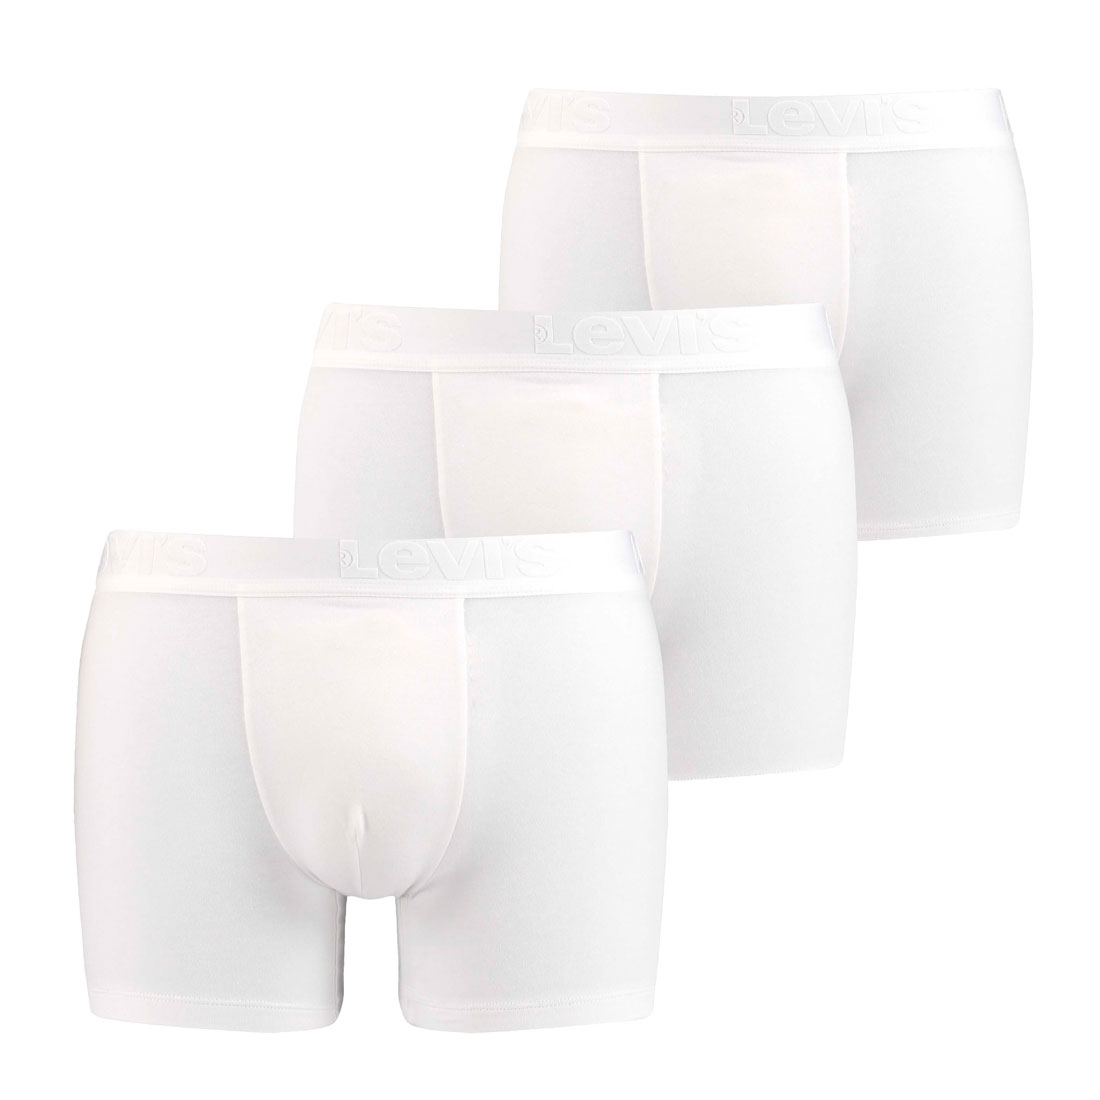 Levi's Mens Premium Men's Briefs (3 Pack) Boxer Shorts, White, M (3er Pack)